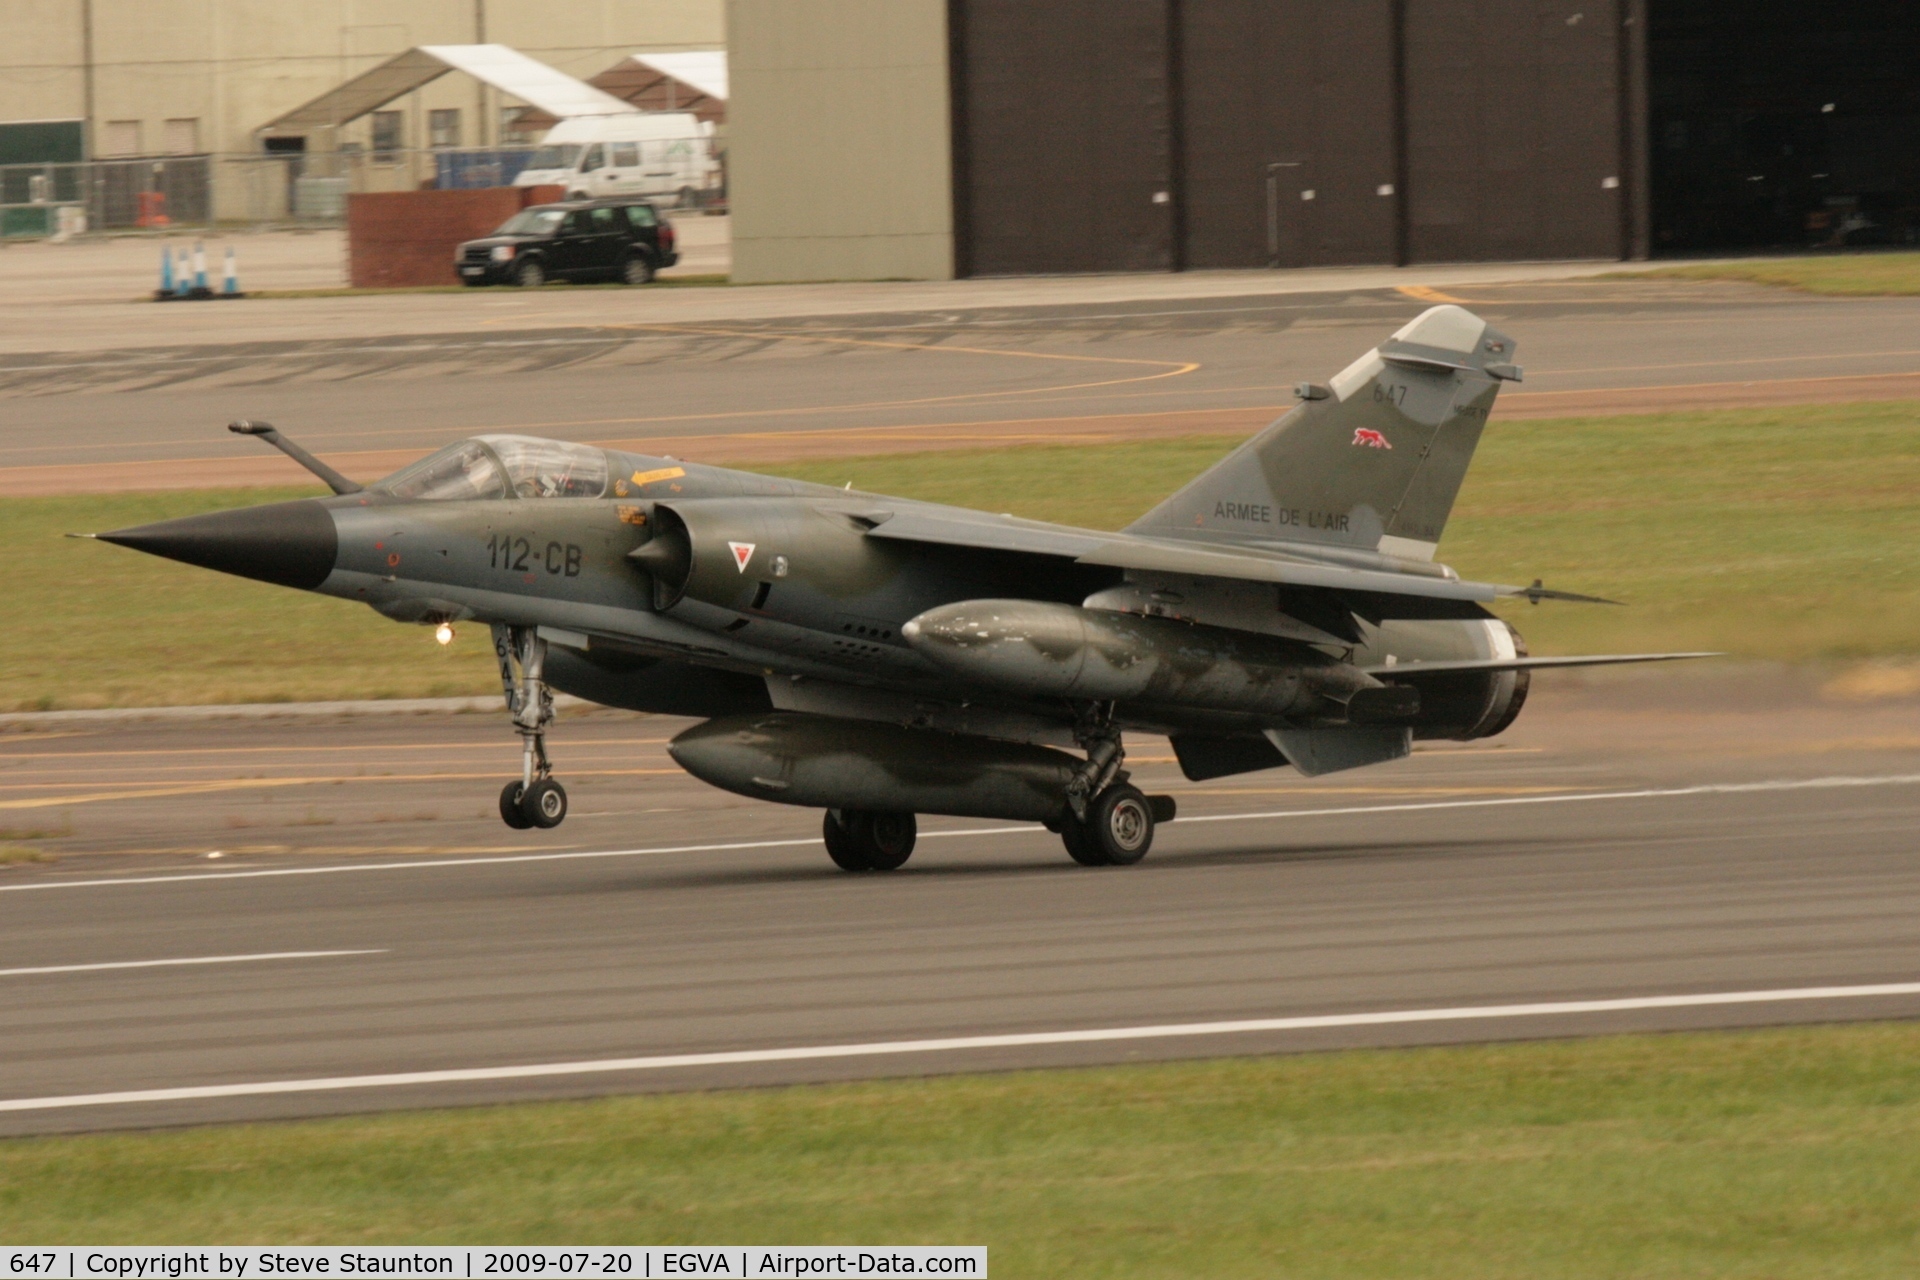 647, Dassault Mirage F.1CR C/N 647, Taken at the Royal International Air Tattoo 2009